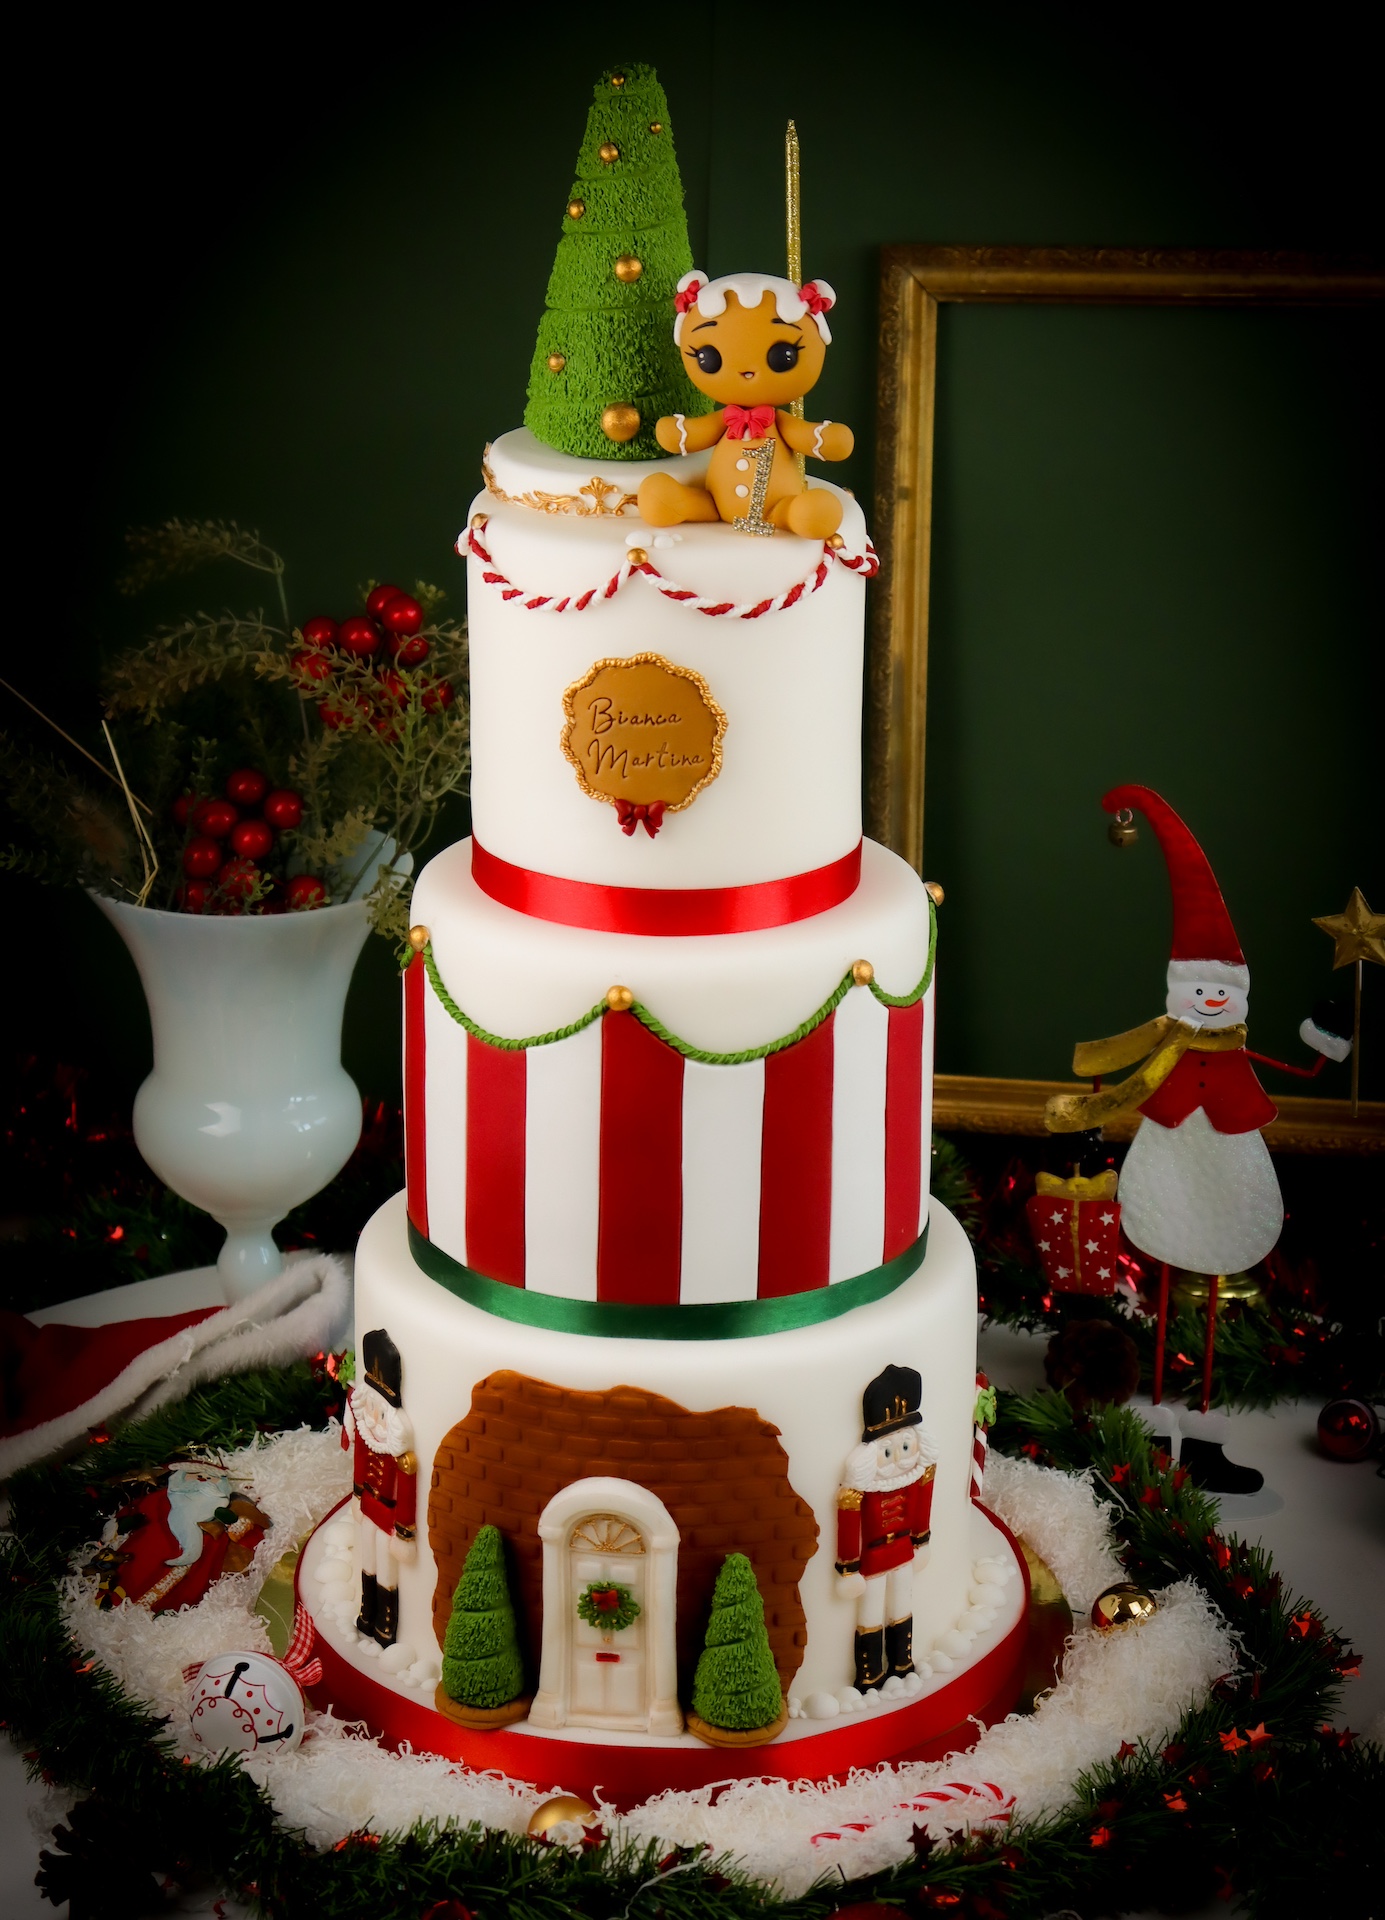 Torta Natale Pan di zenzero - Cake Christmas Gingerbread 2